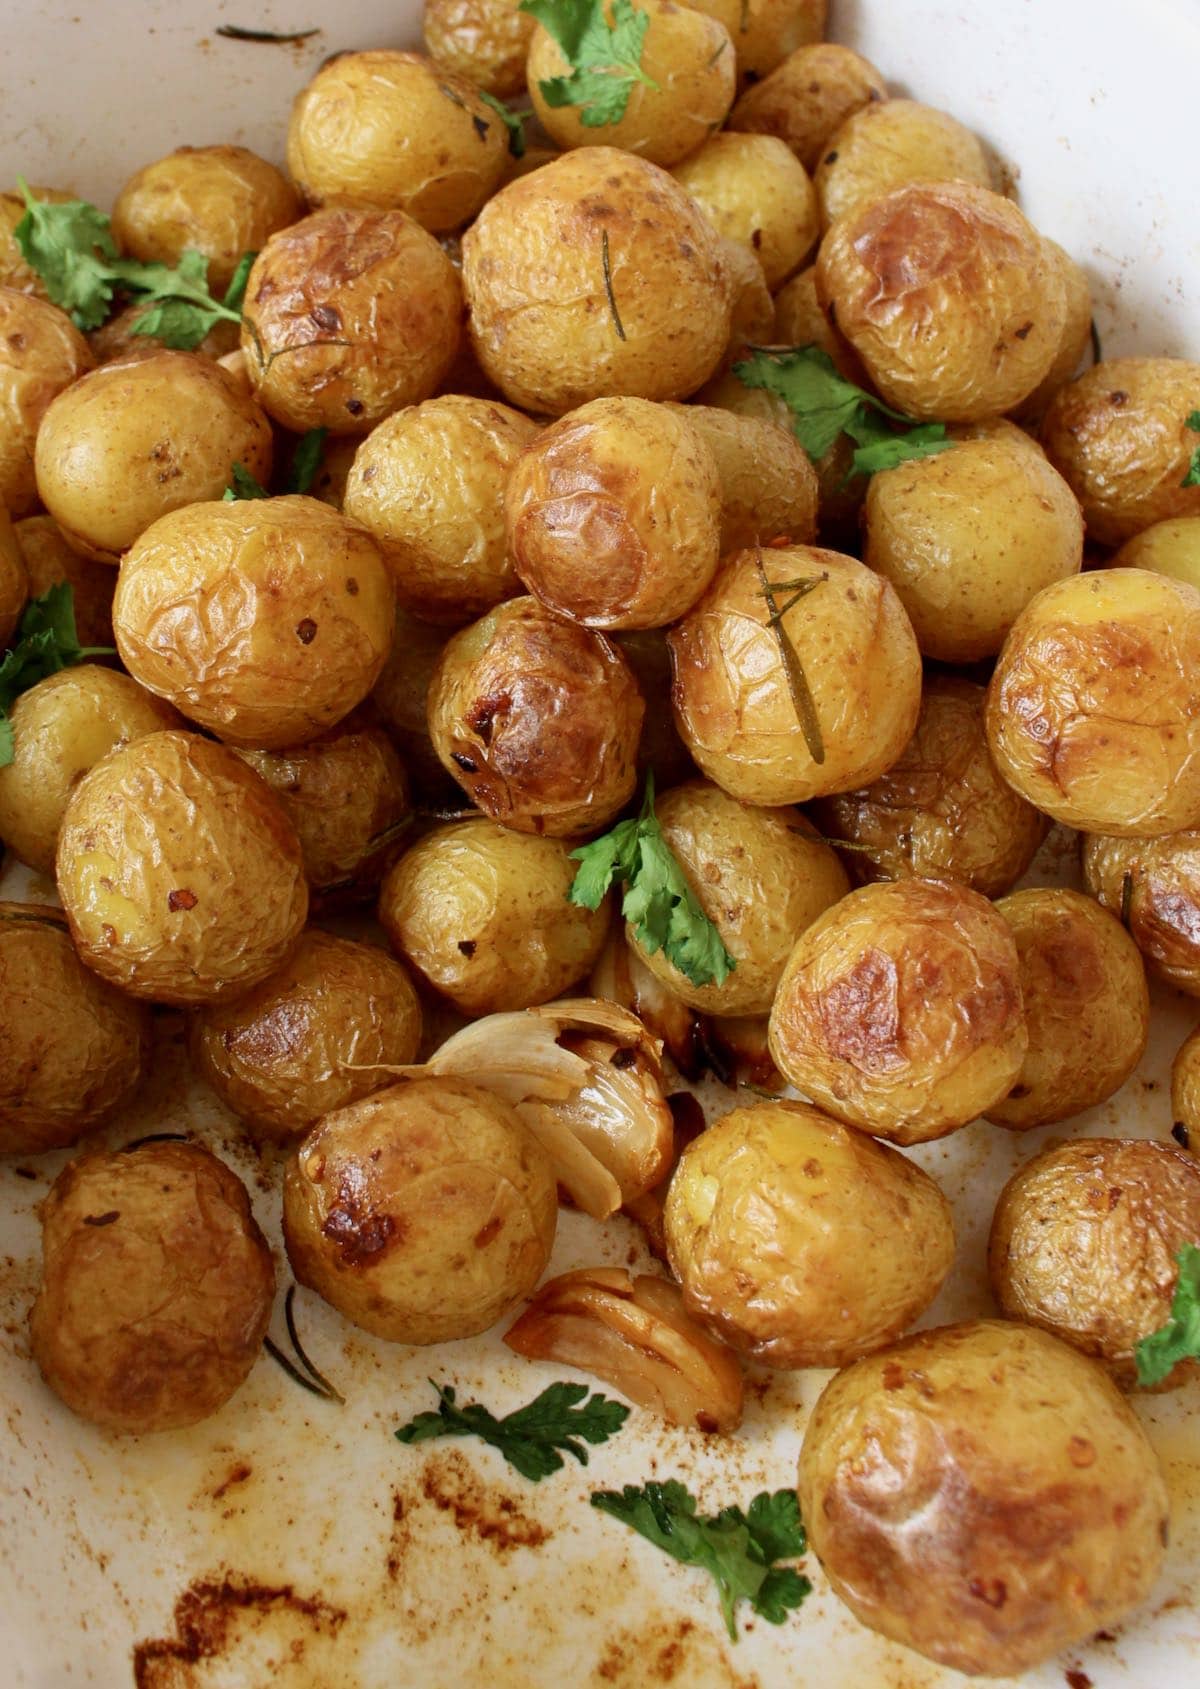 Whole roasted baby potatoes